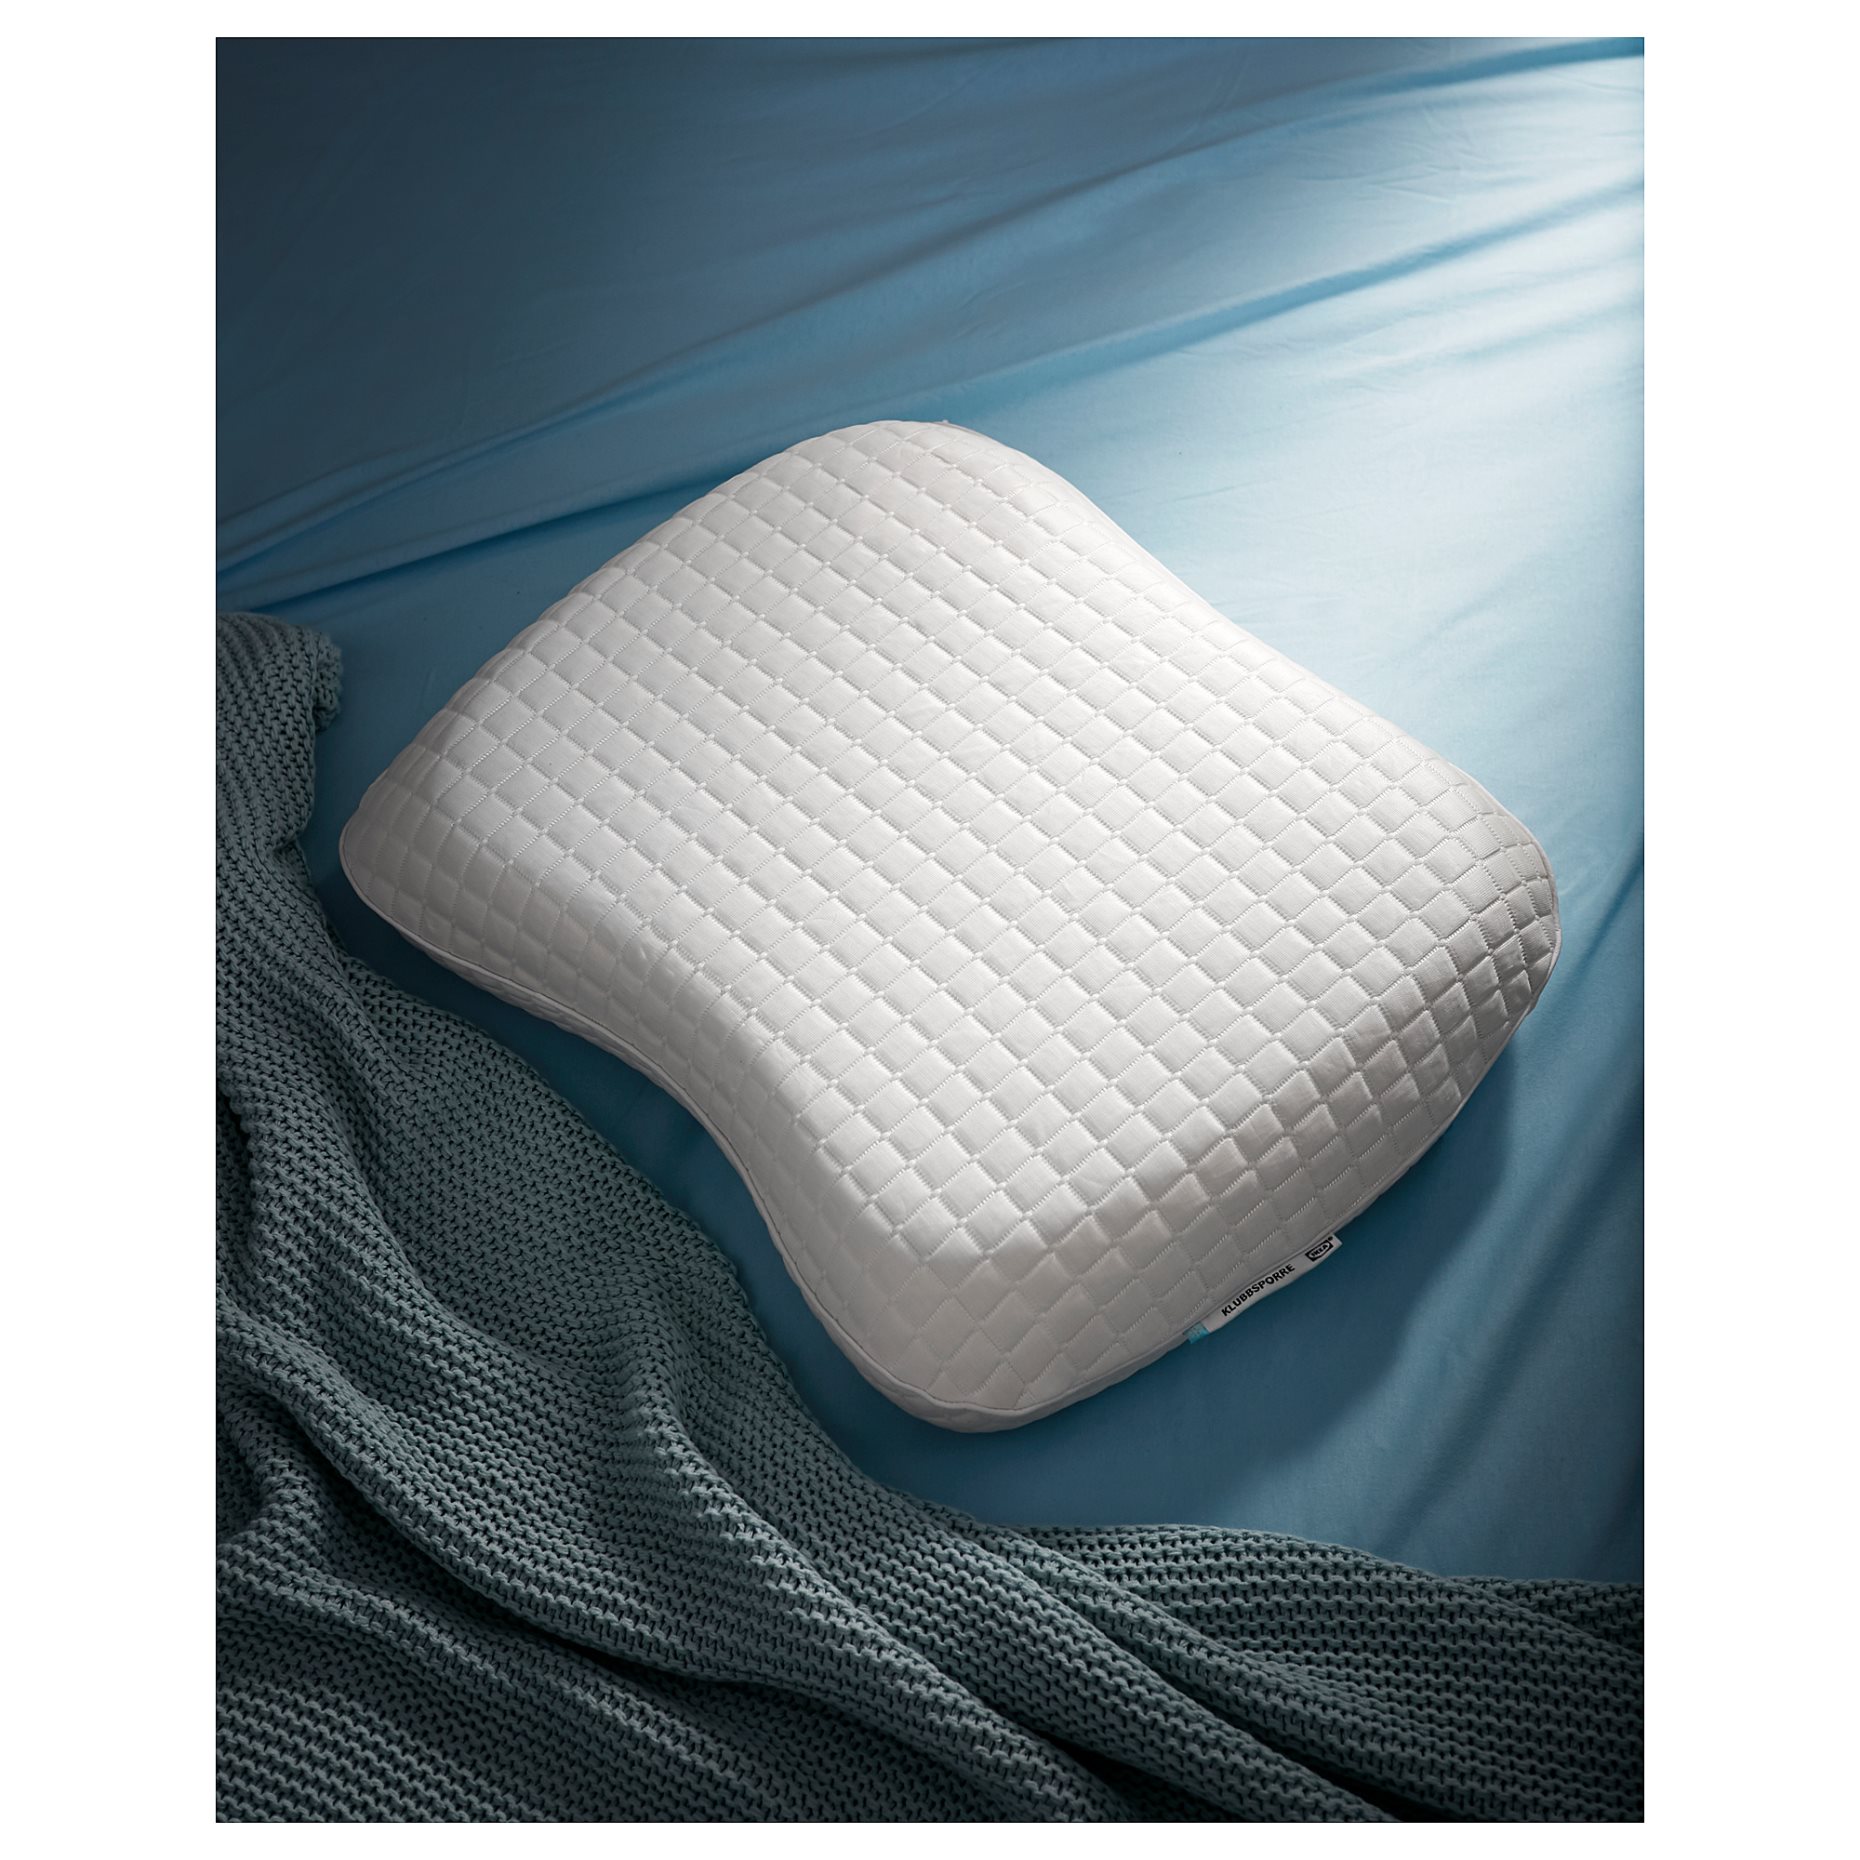 KLUBBSPORRE, ergonomic pillow, multi position, 004.460.96